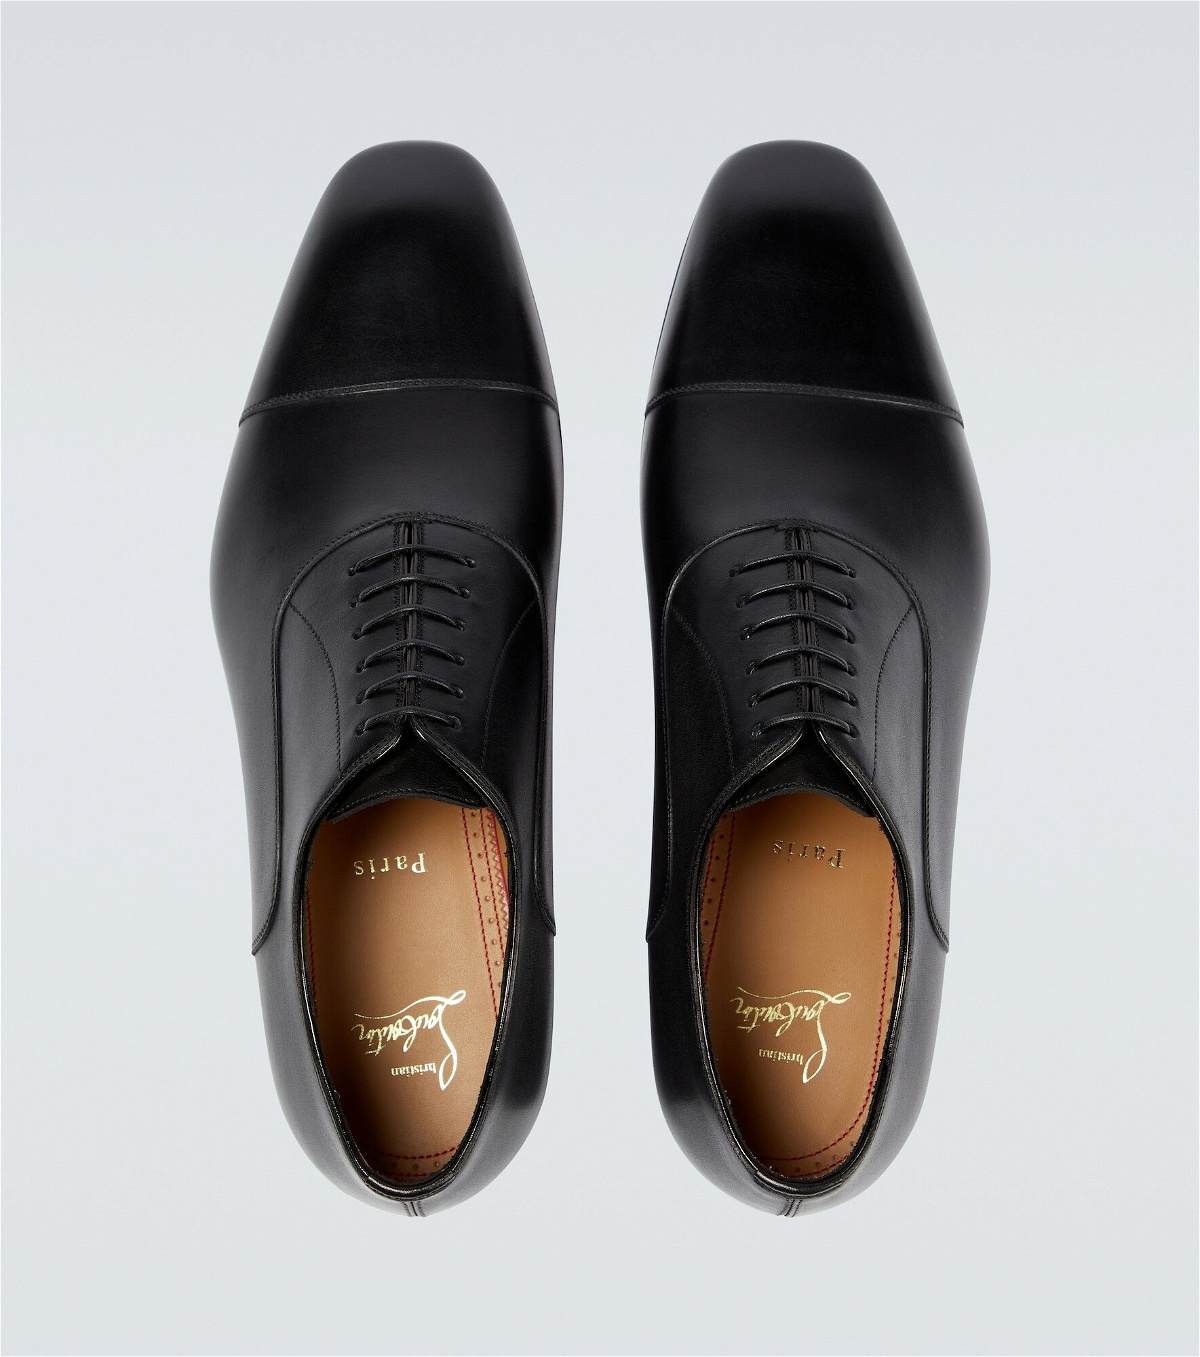 Christian Louboutin - Greggo leather Oxford shoes Christian Louboutin